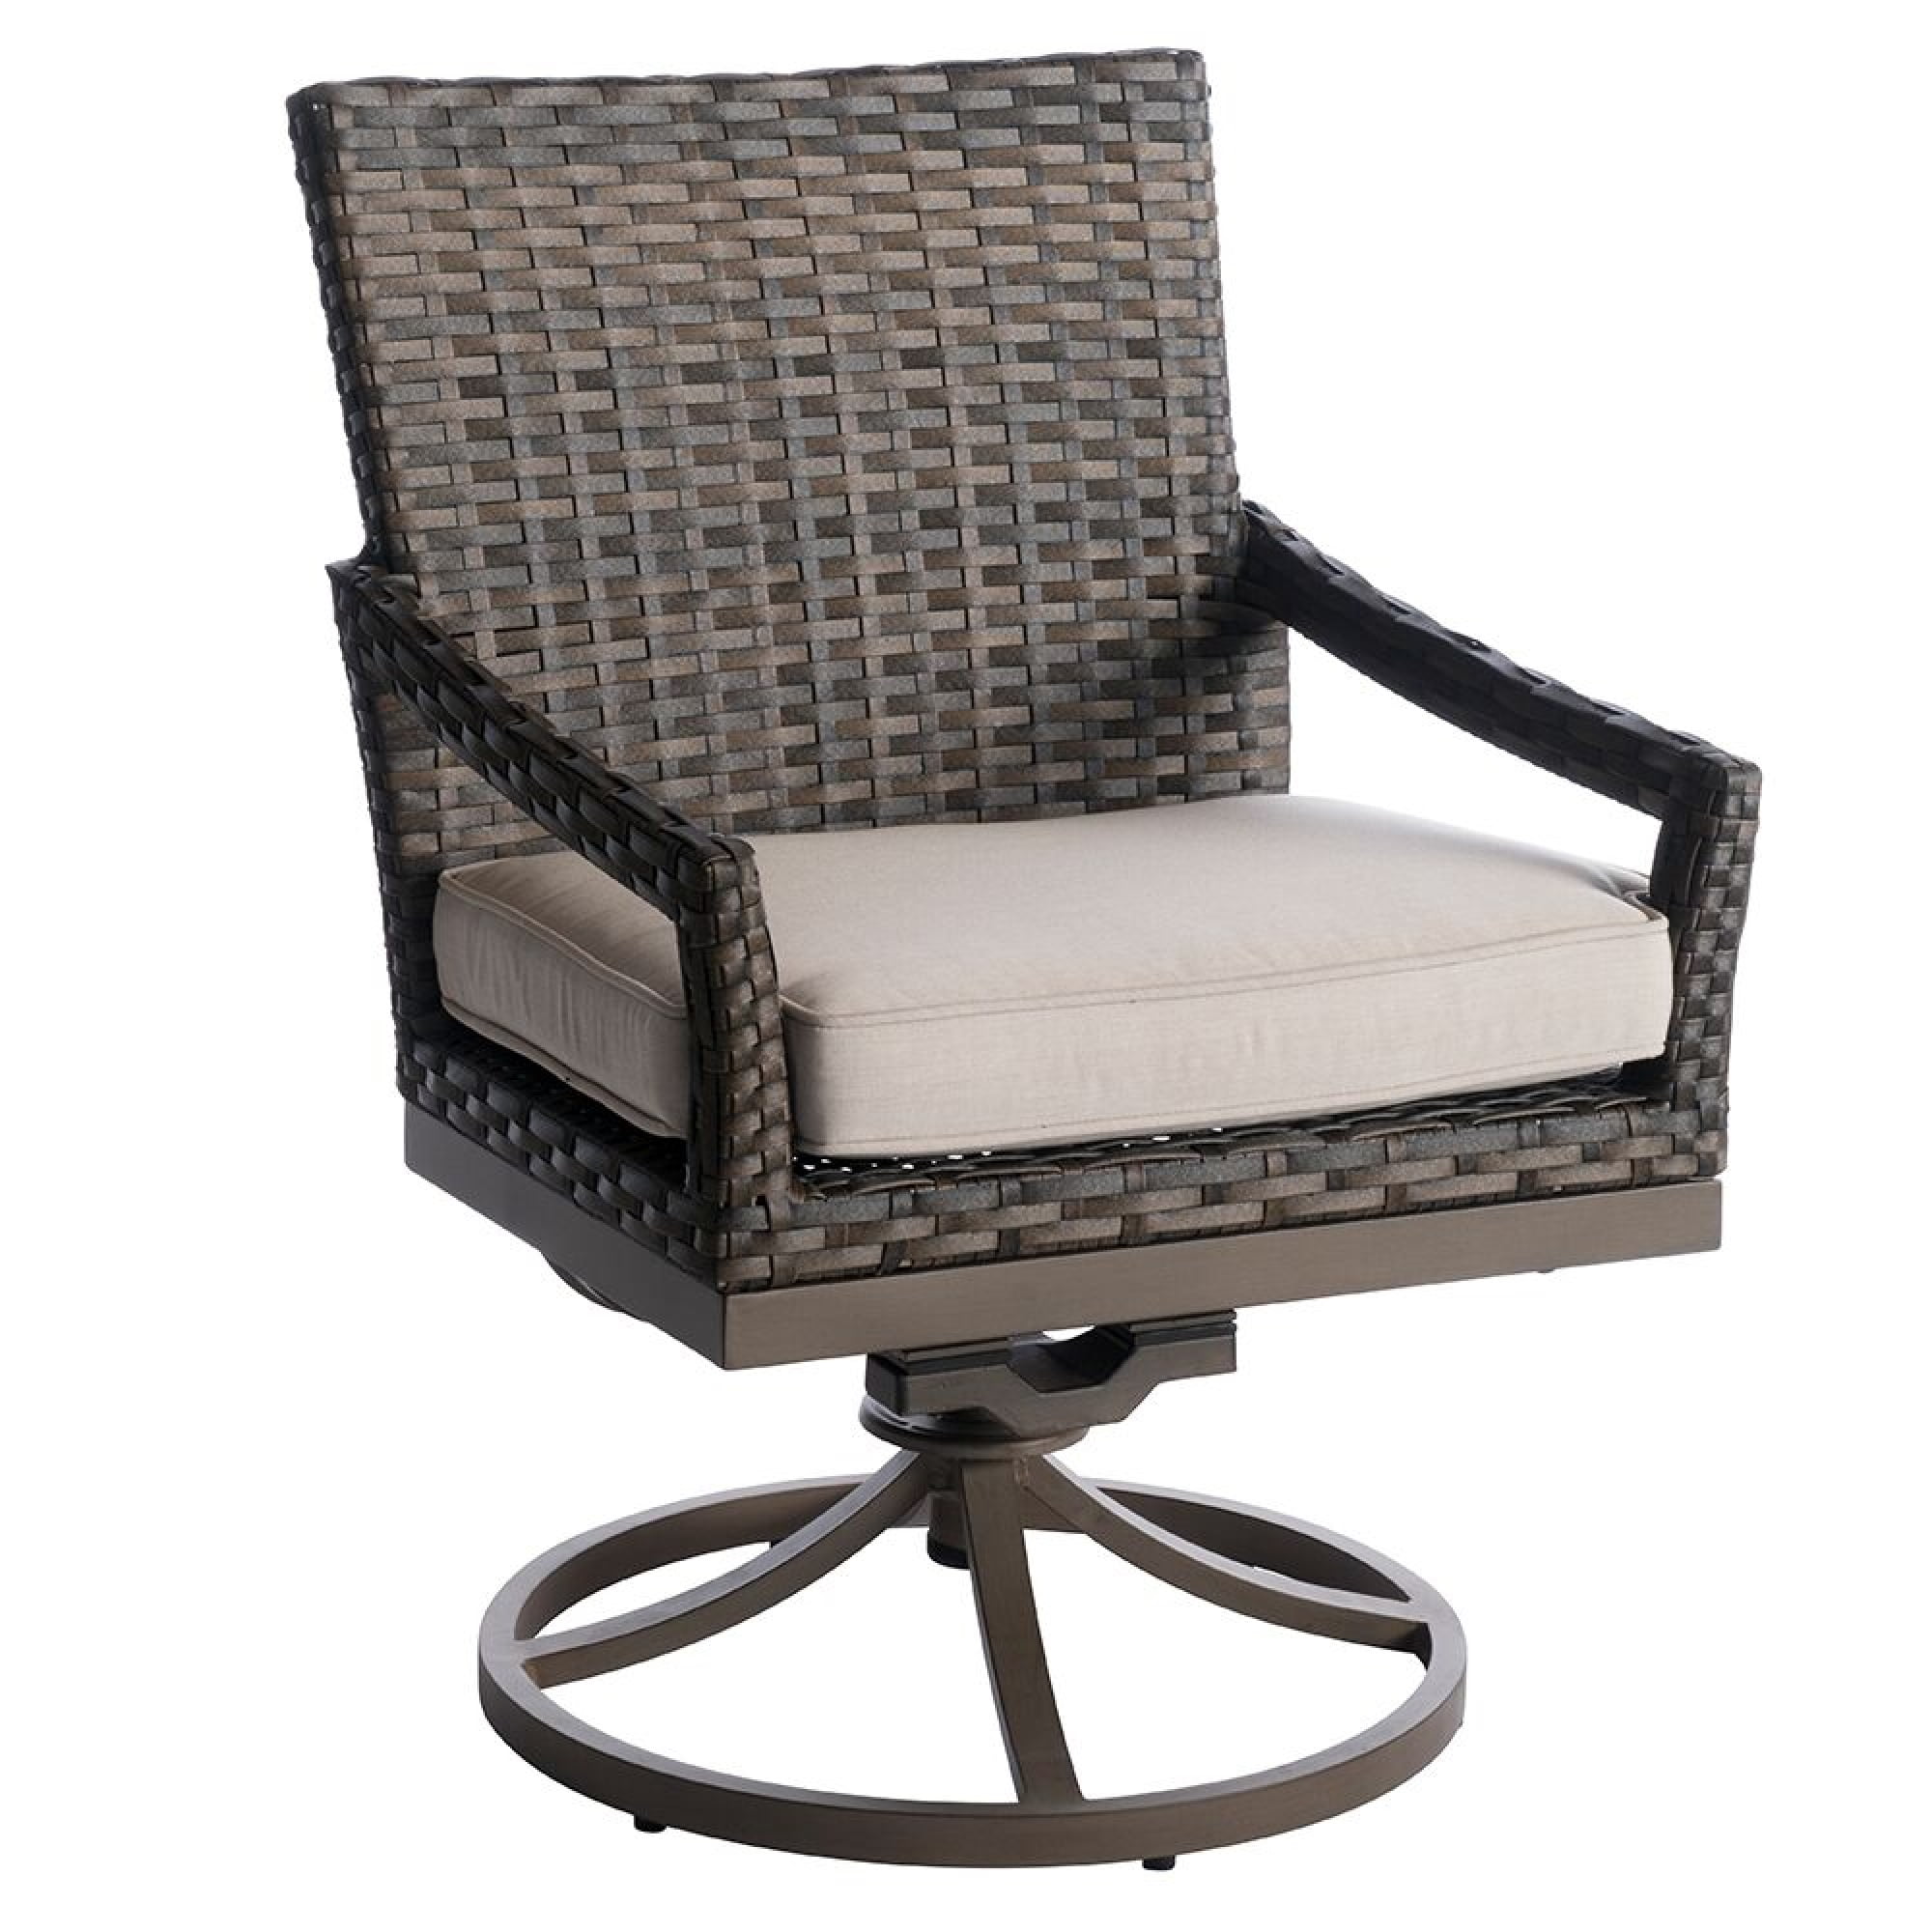 Outdoor Wicker Swivel Rocking Chairs - Swivel Chairs Patio Rocker Chair ...